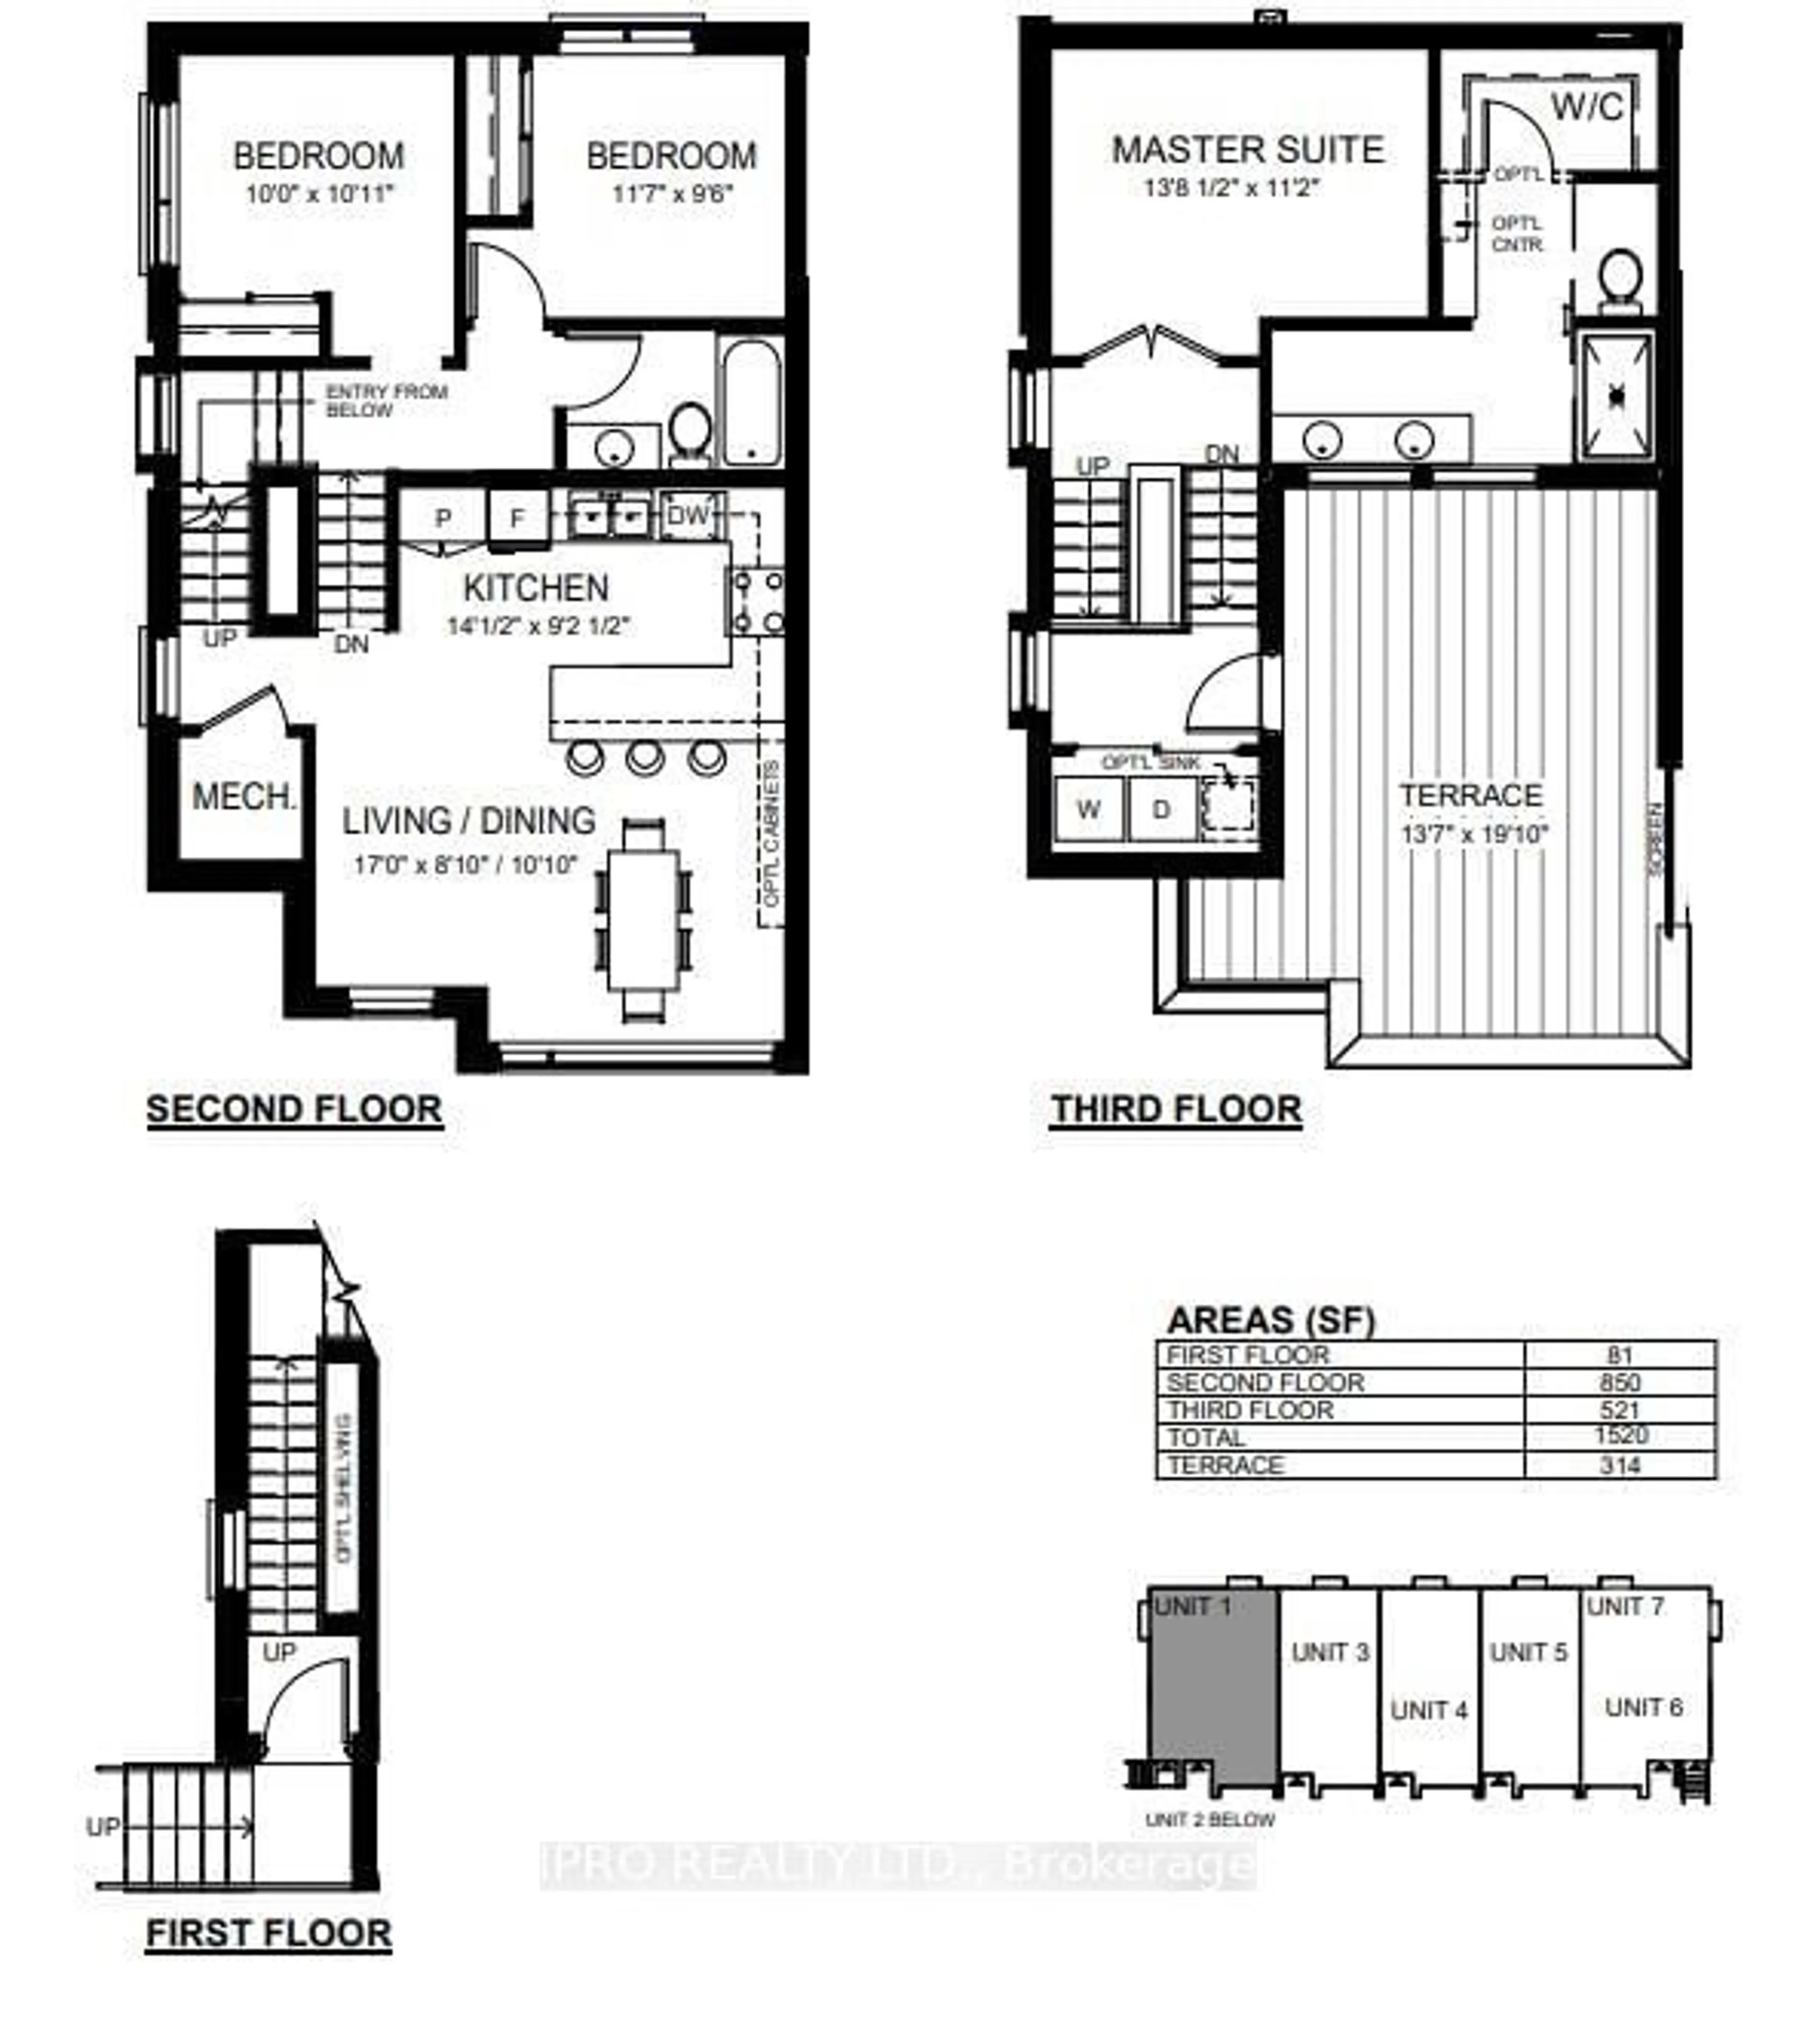 Floor plan for 183 Victoria St #1, Kitchener Ontario N2H 5C5